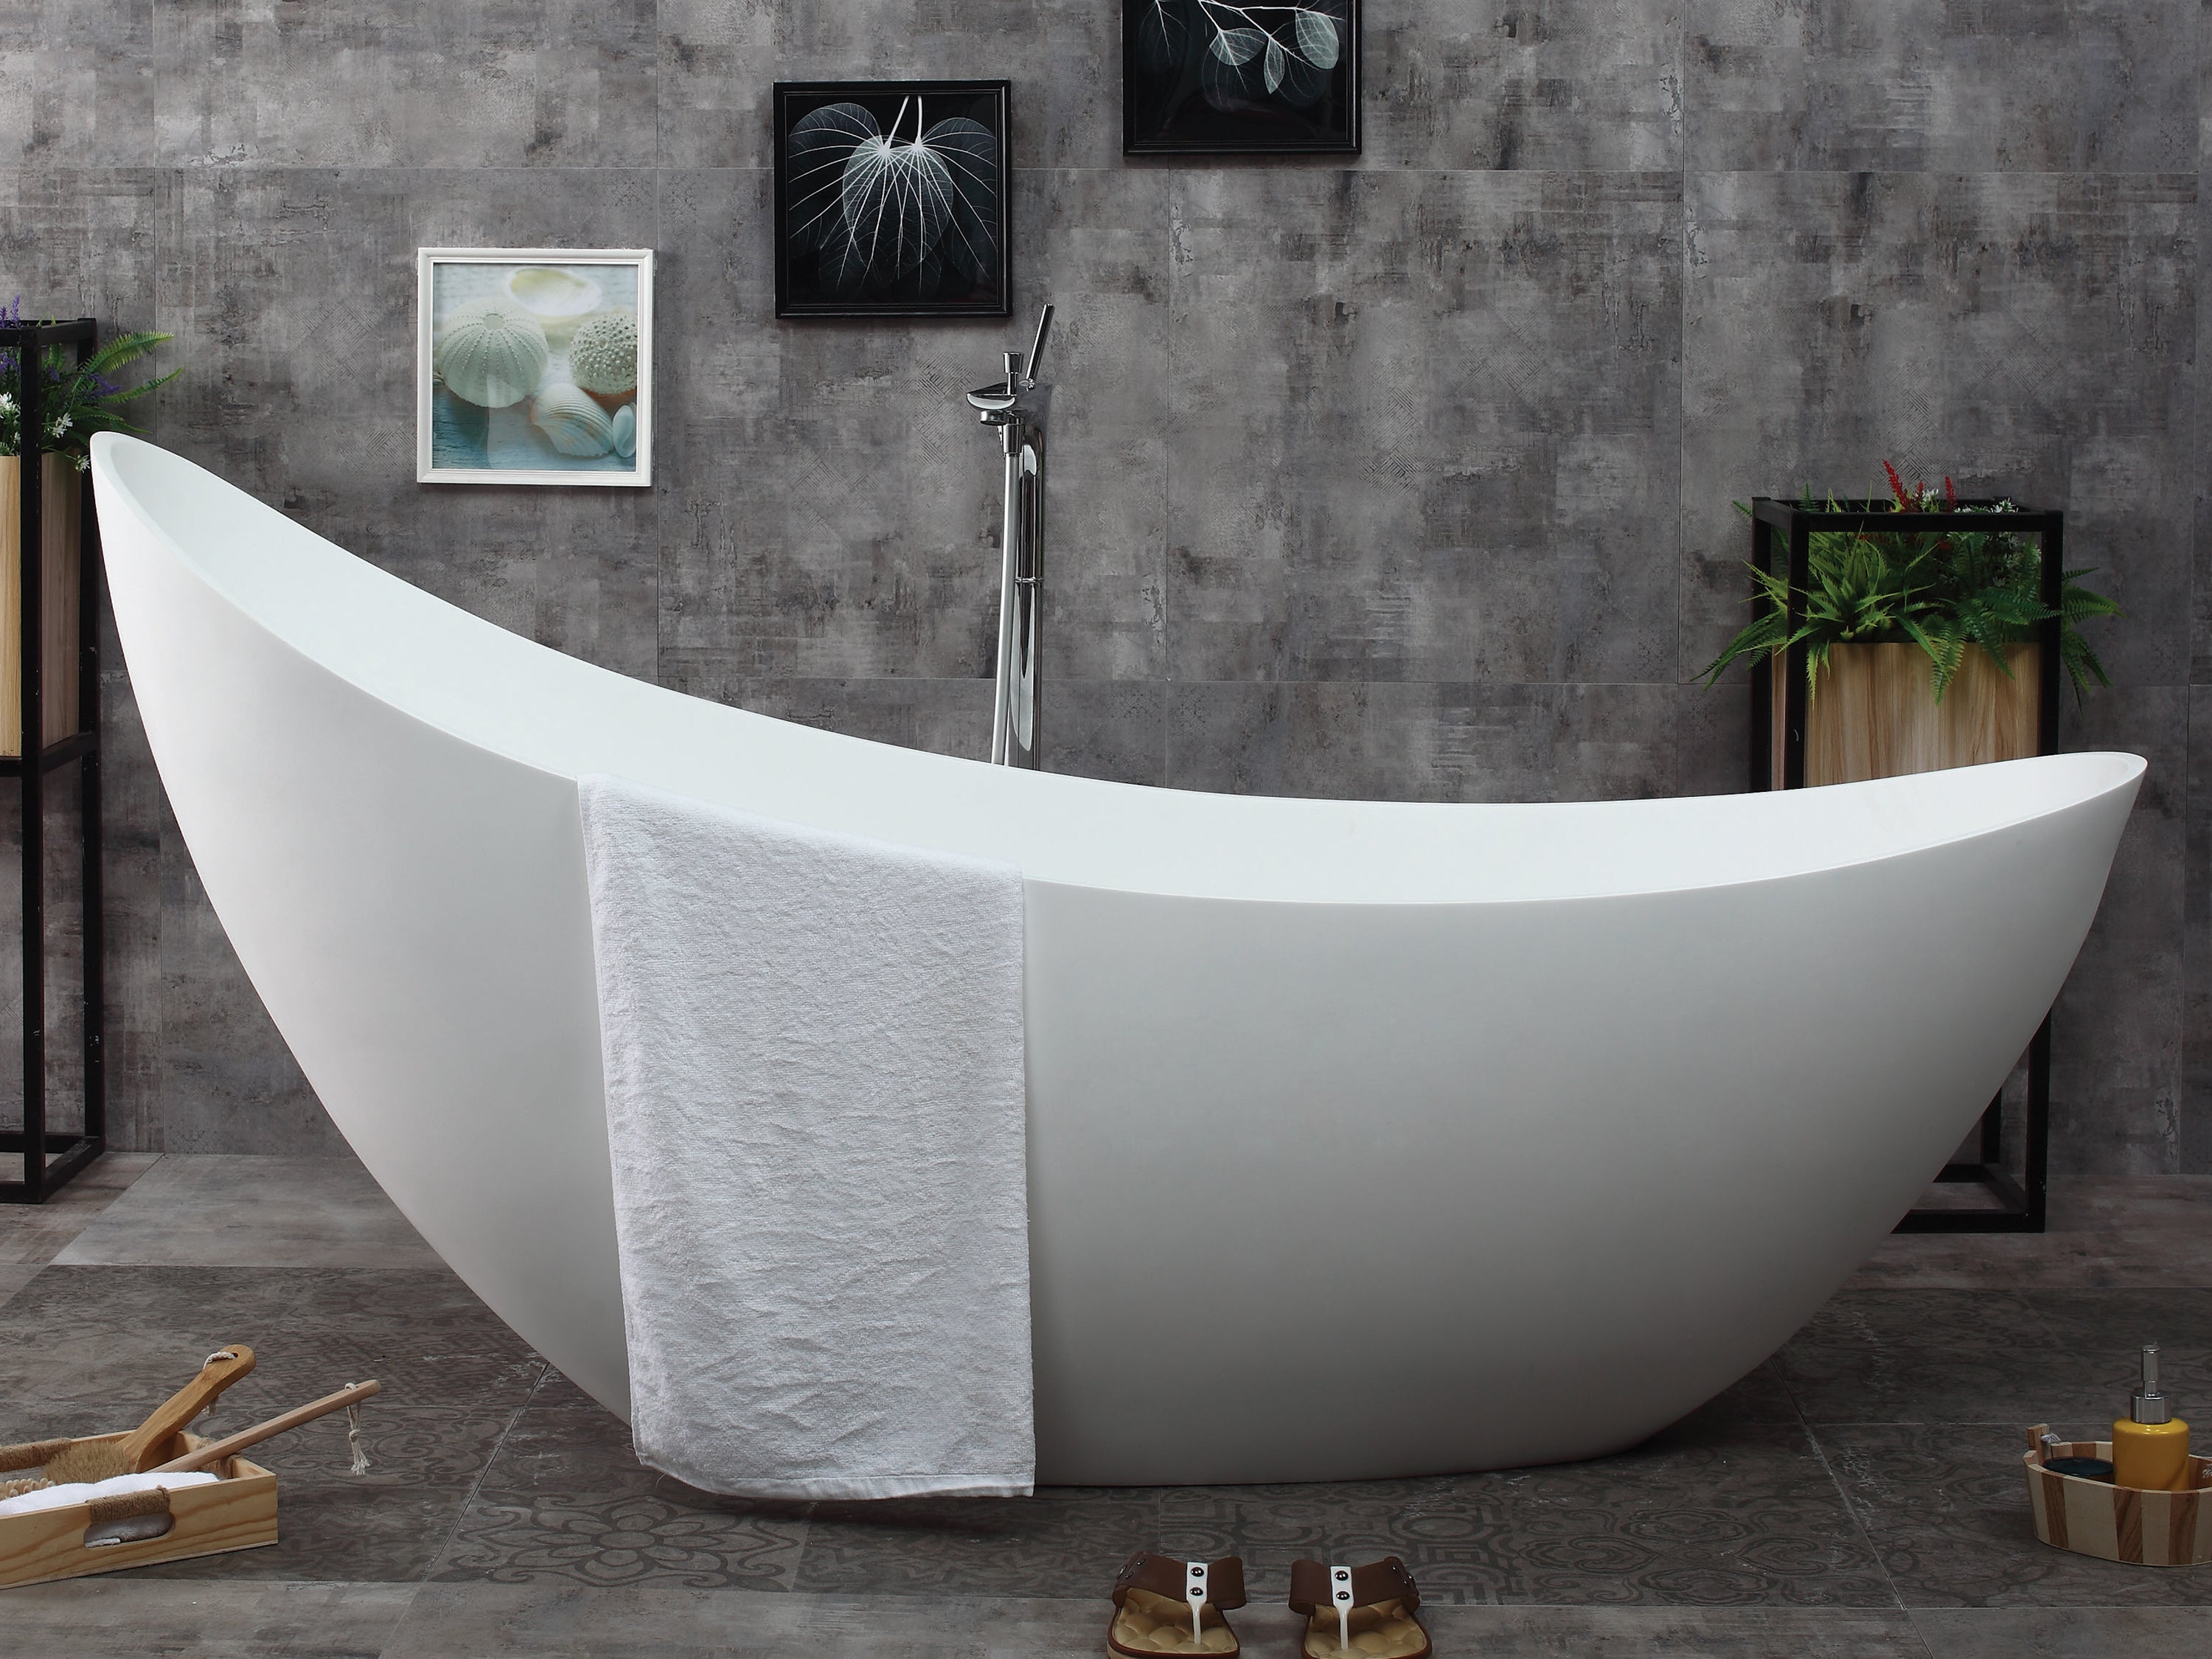 ALFI Brand - 73" White Solid Surface Smooth Resin Soaking Slipper Bathtub | AB9951